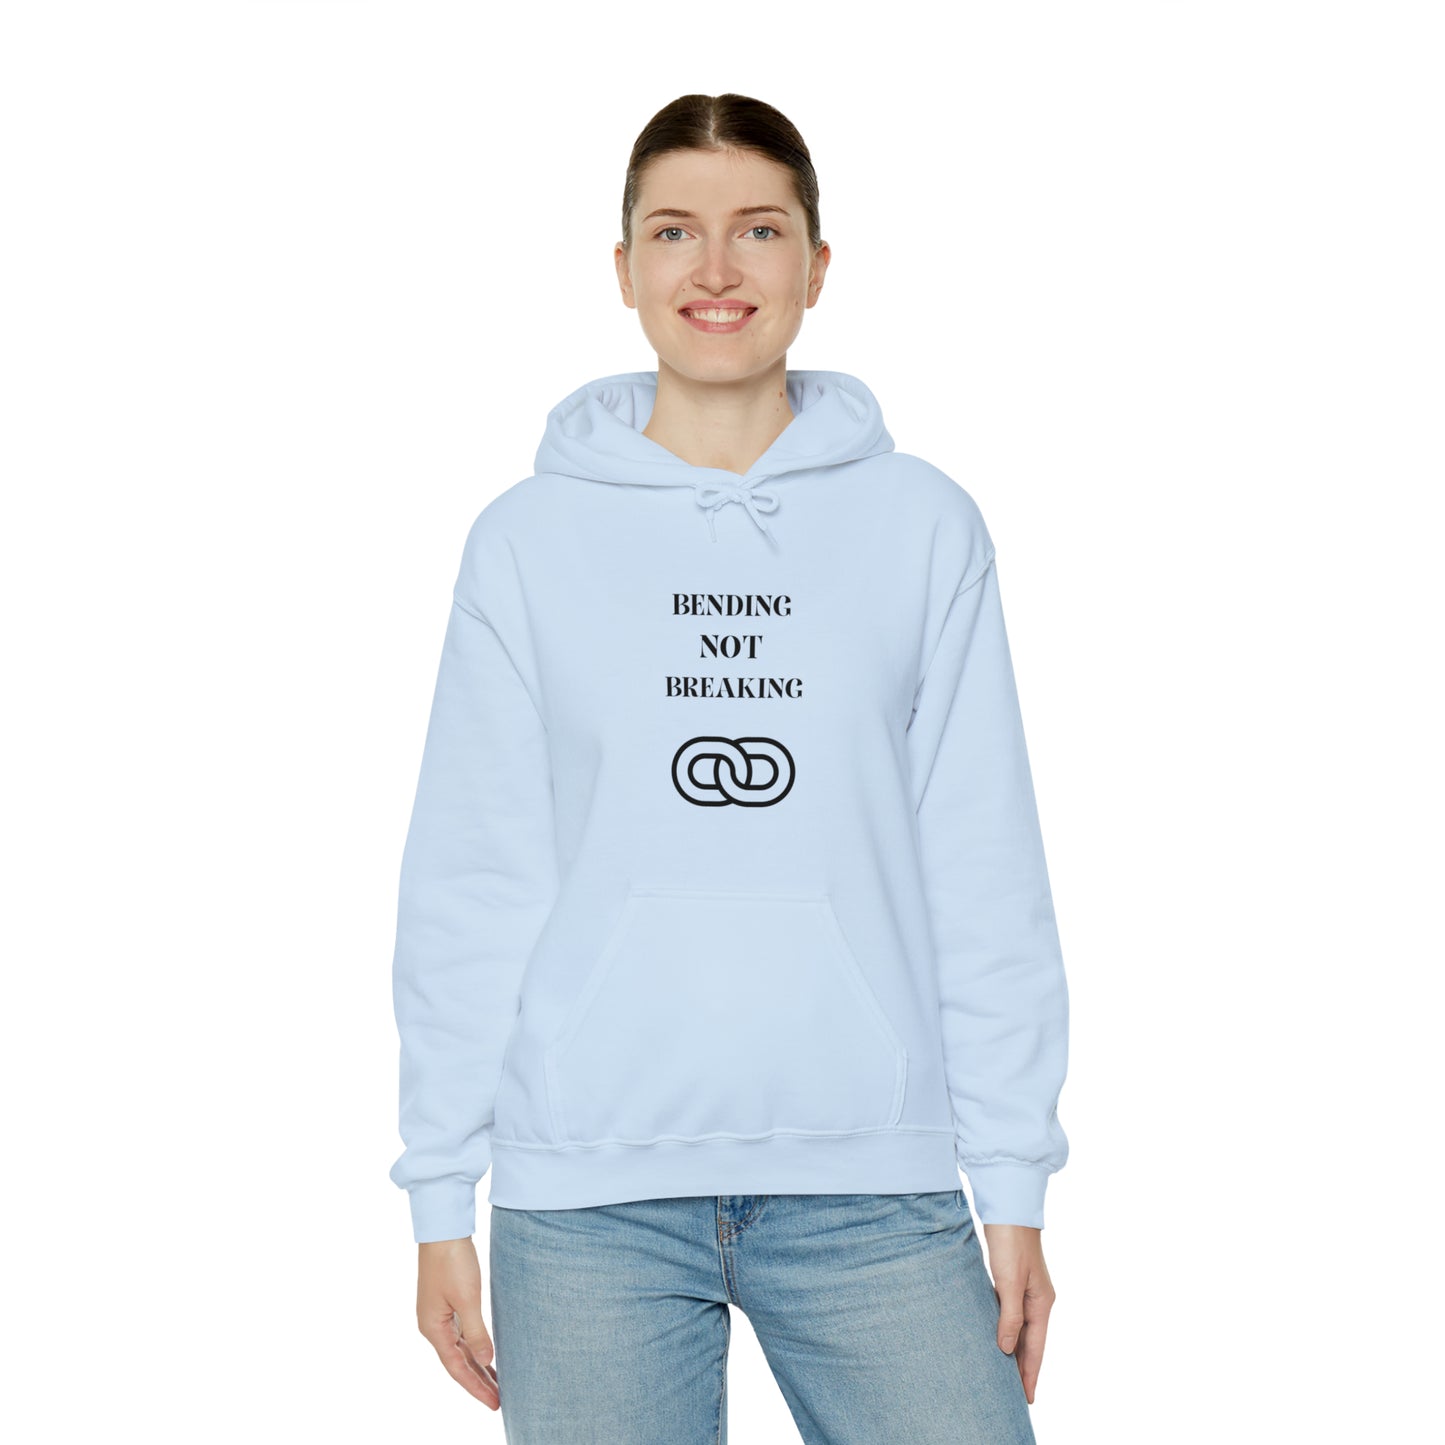 Bending not breaking  Heavy Blend Hooded Sweatshirt gift, hoodie gift to celebrate resilience. sweatshirt gift for friends